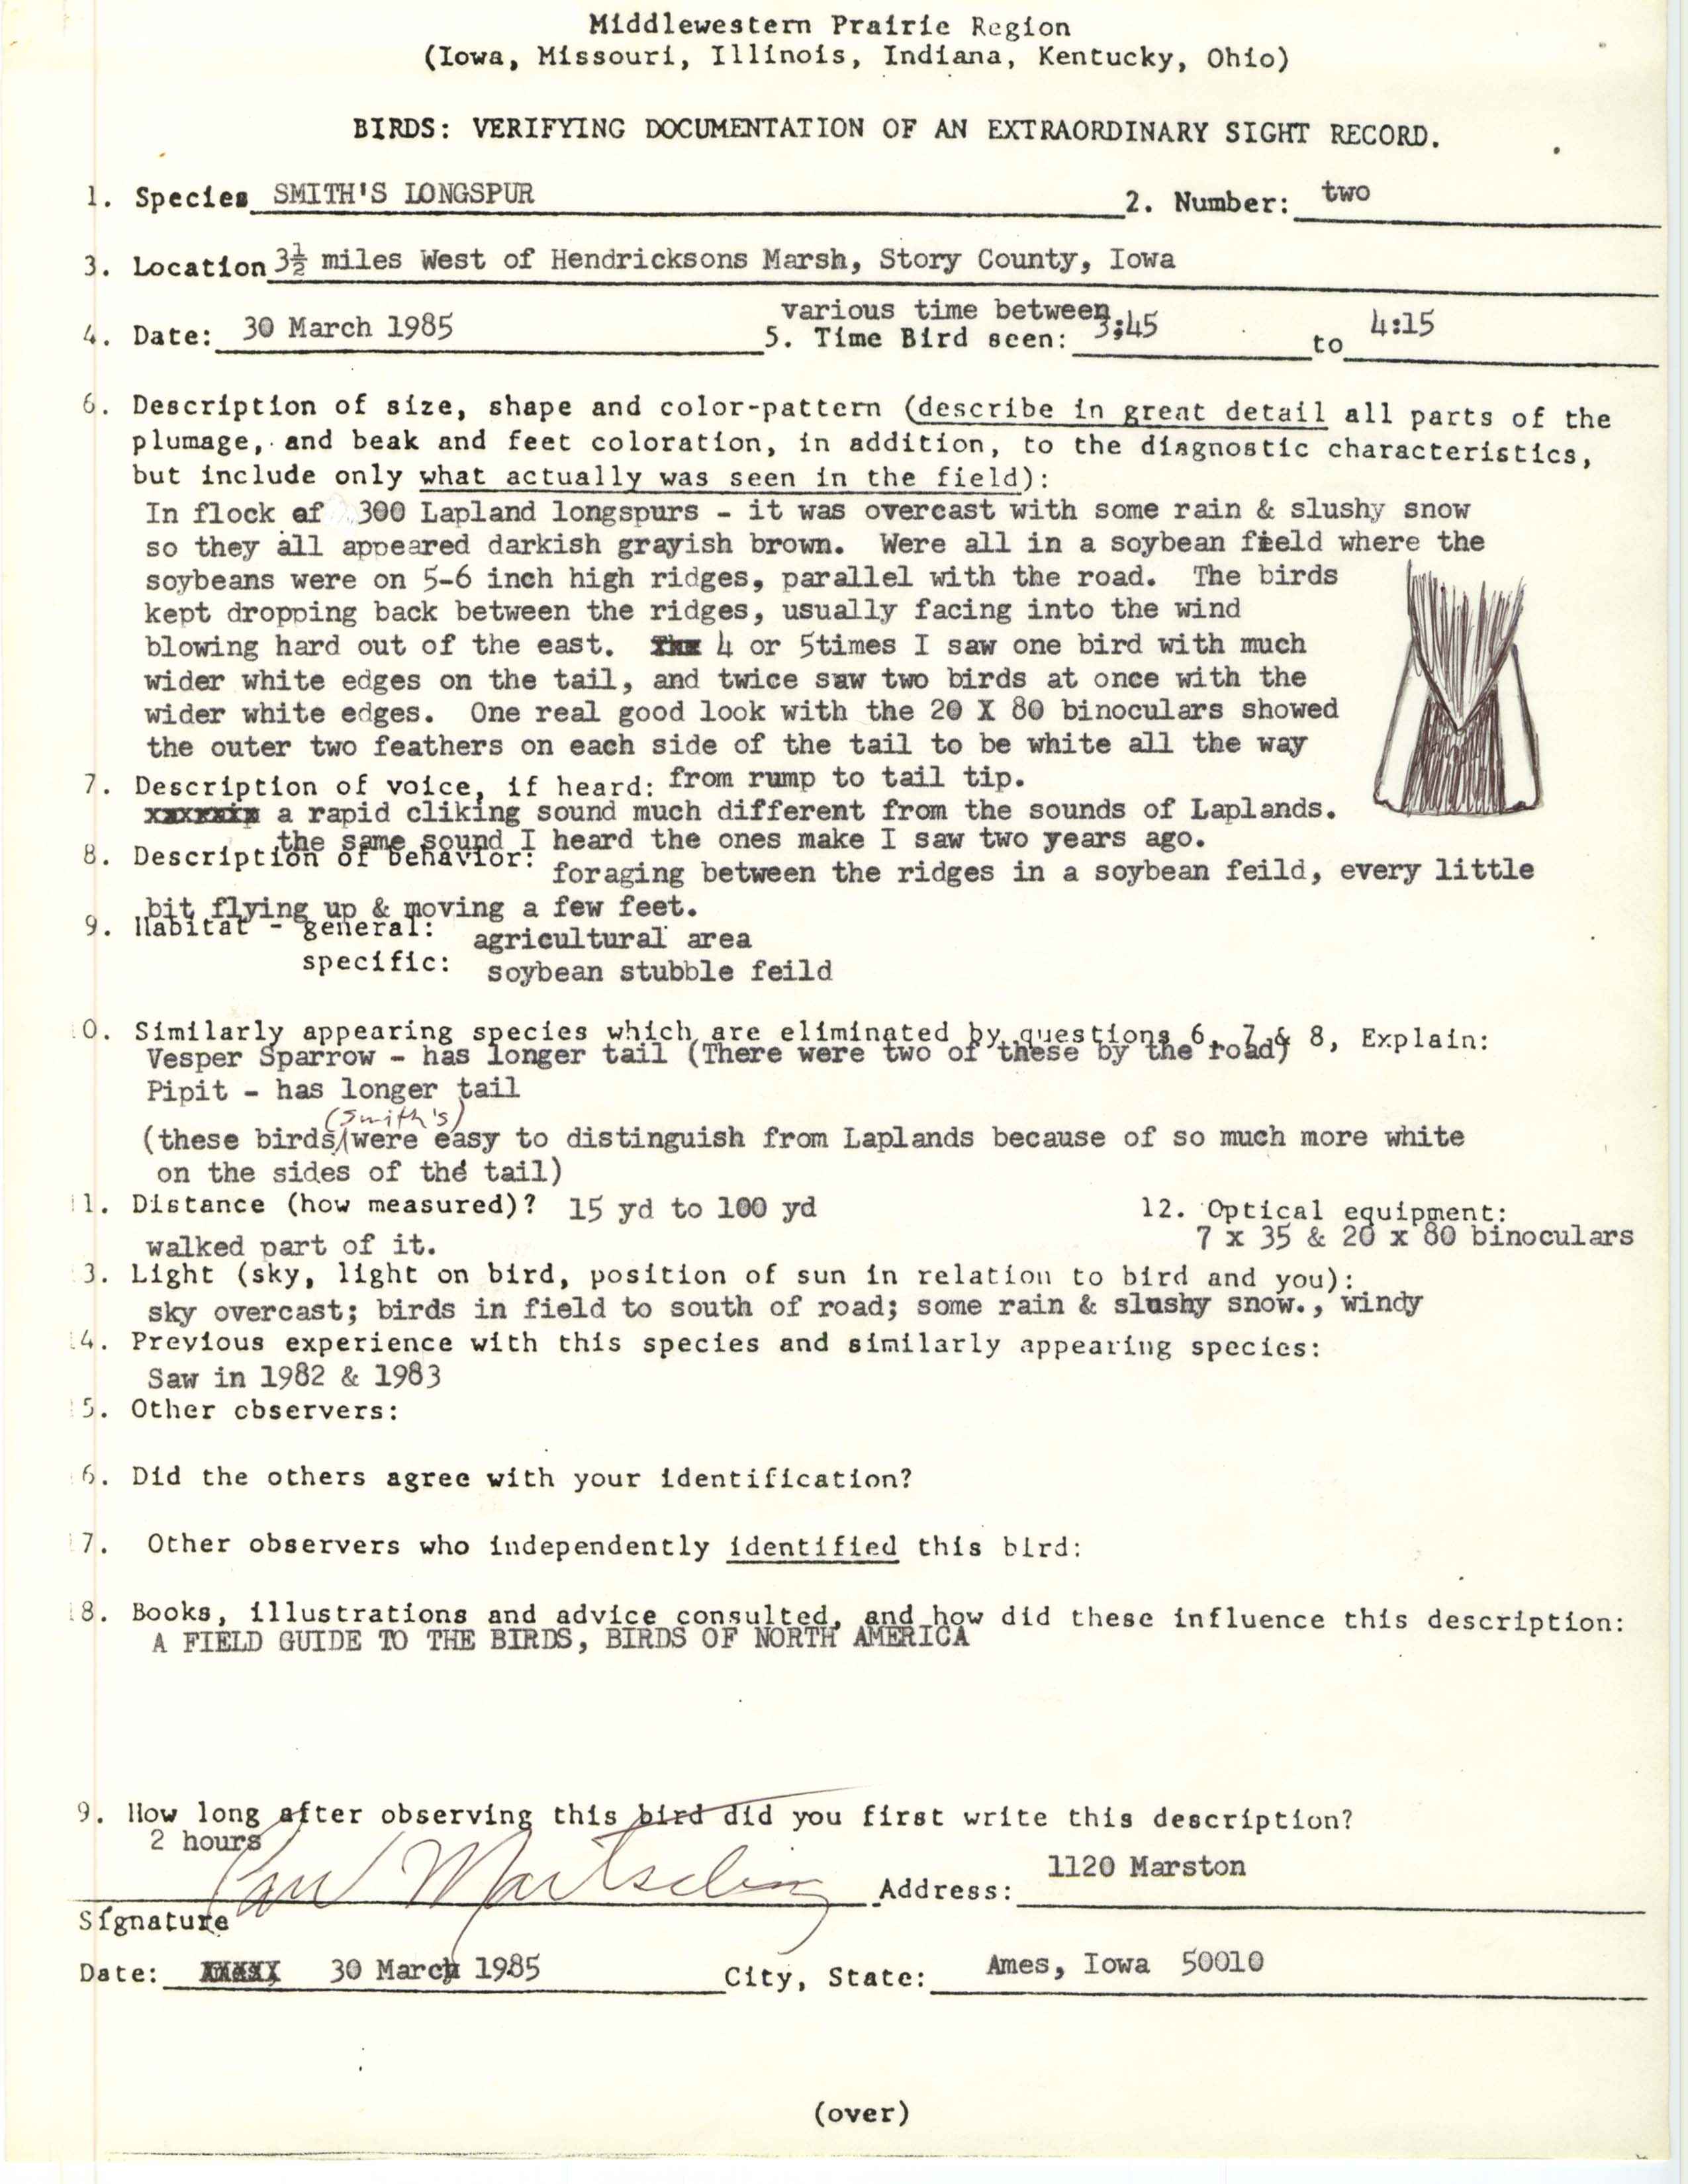 Rare bird documentation form for Smith's Longspur west of Hendrickson Marsh, 1985